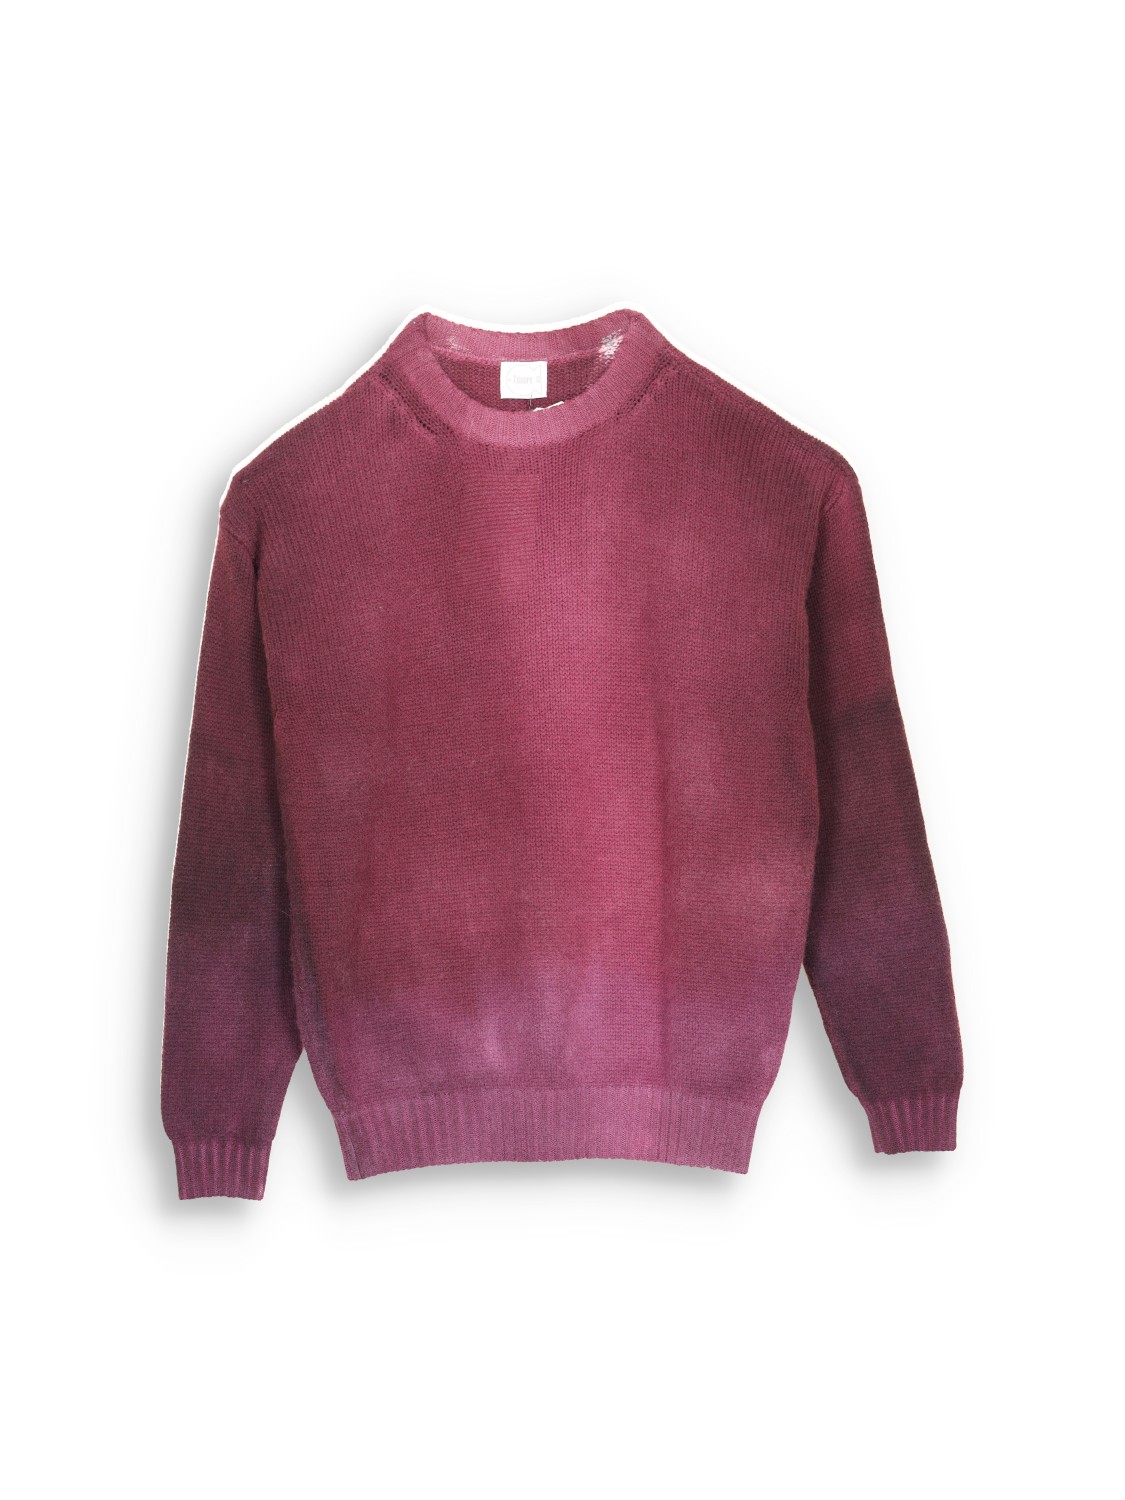 Bunker 1 - Cashmere color gradient sweater